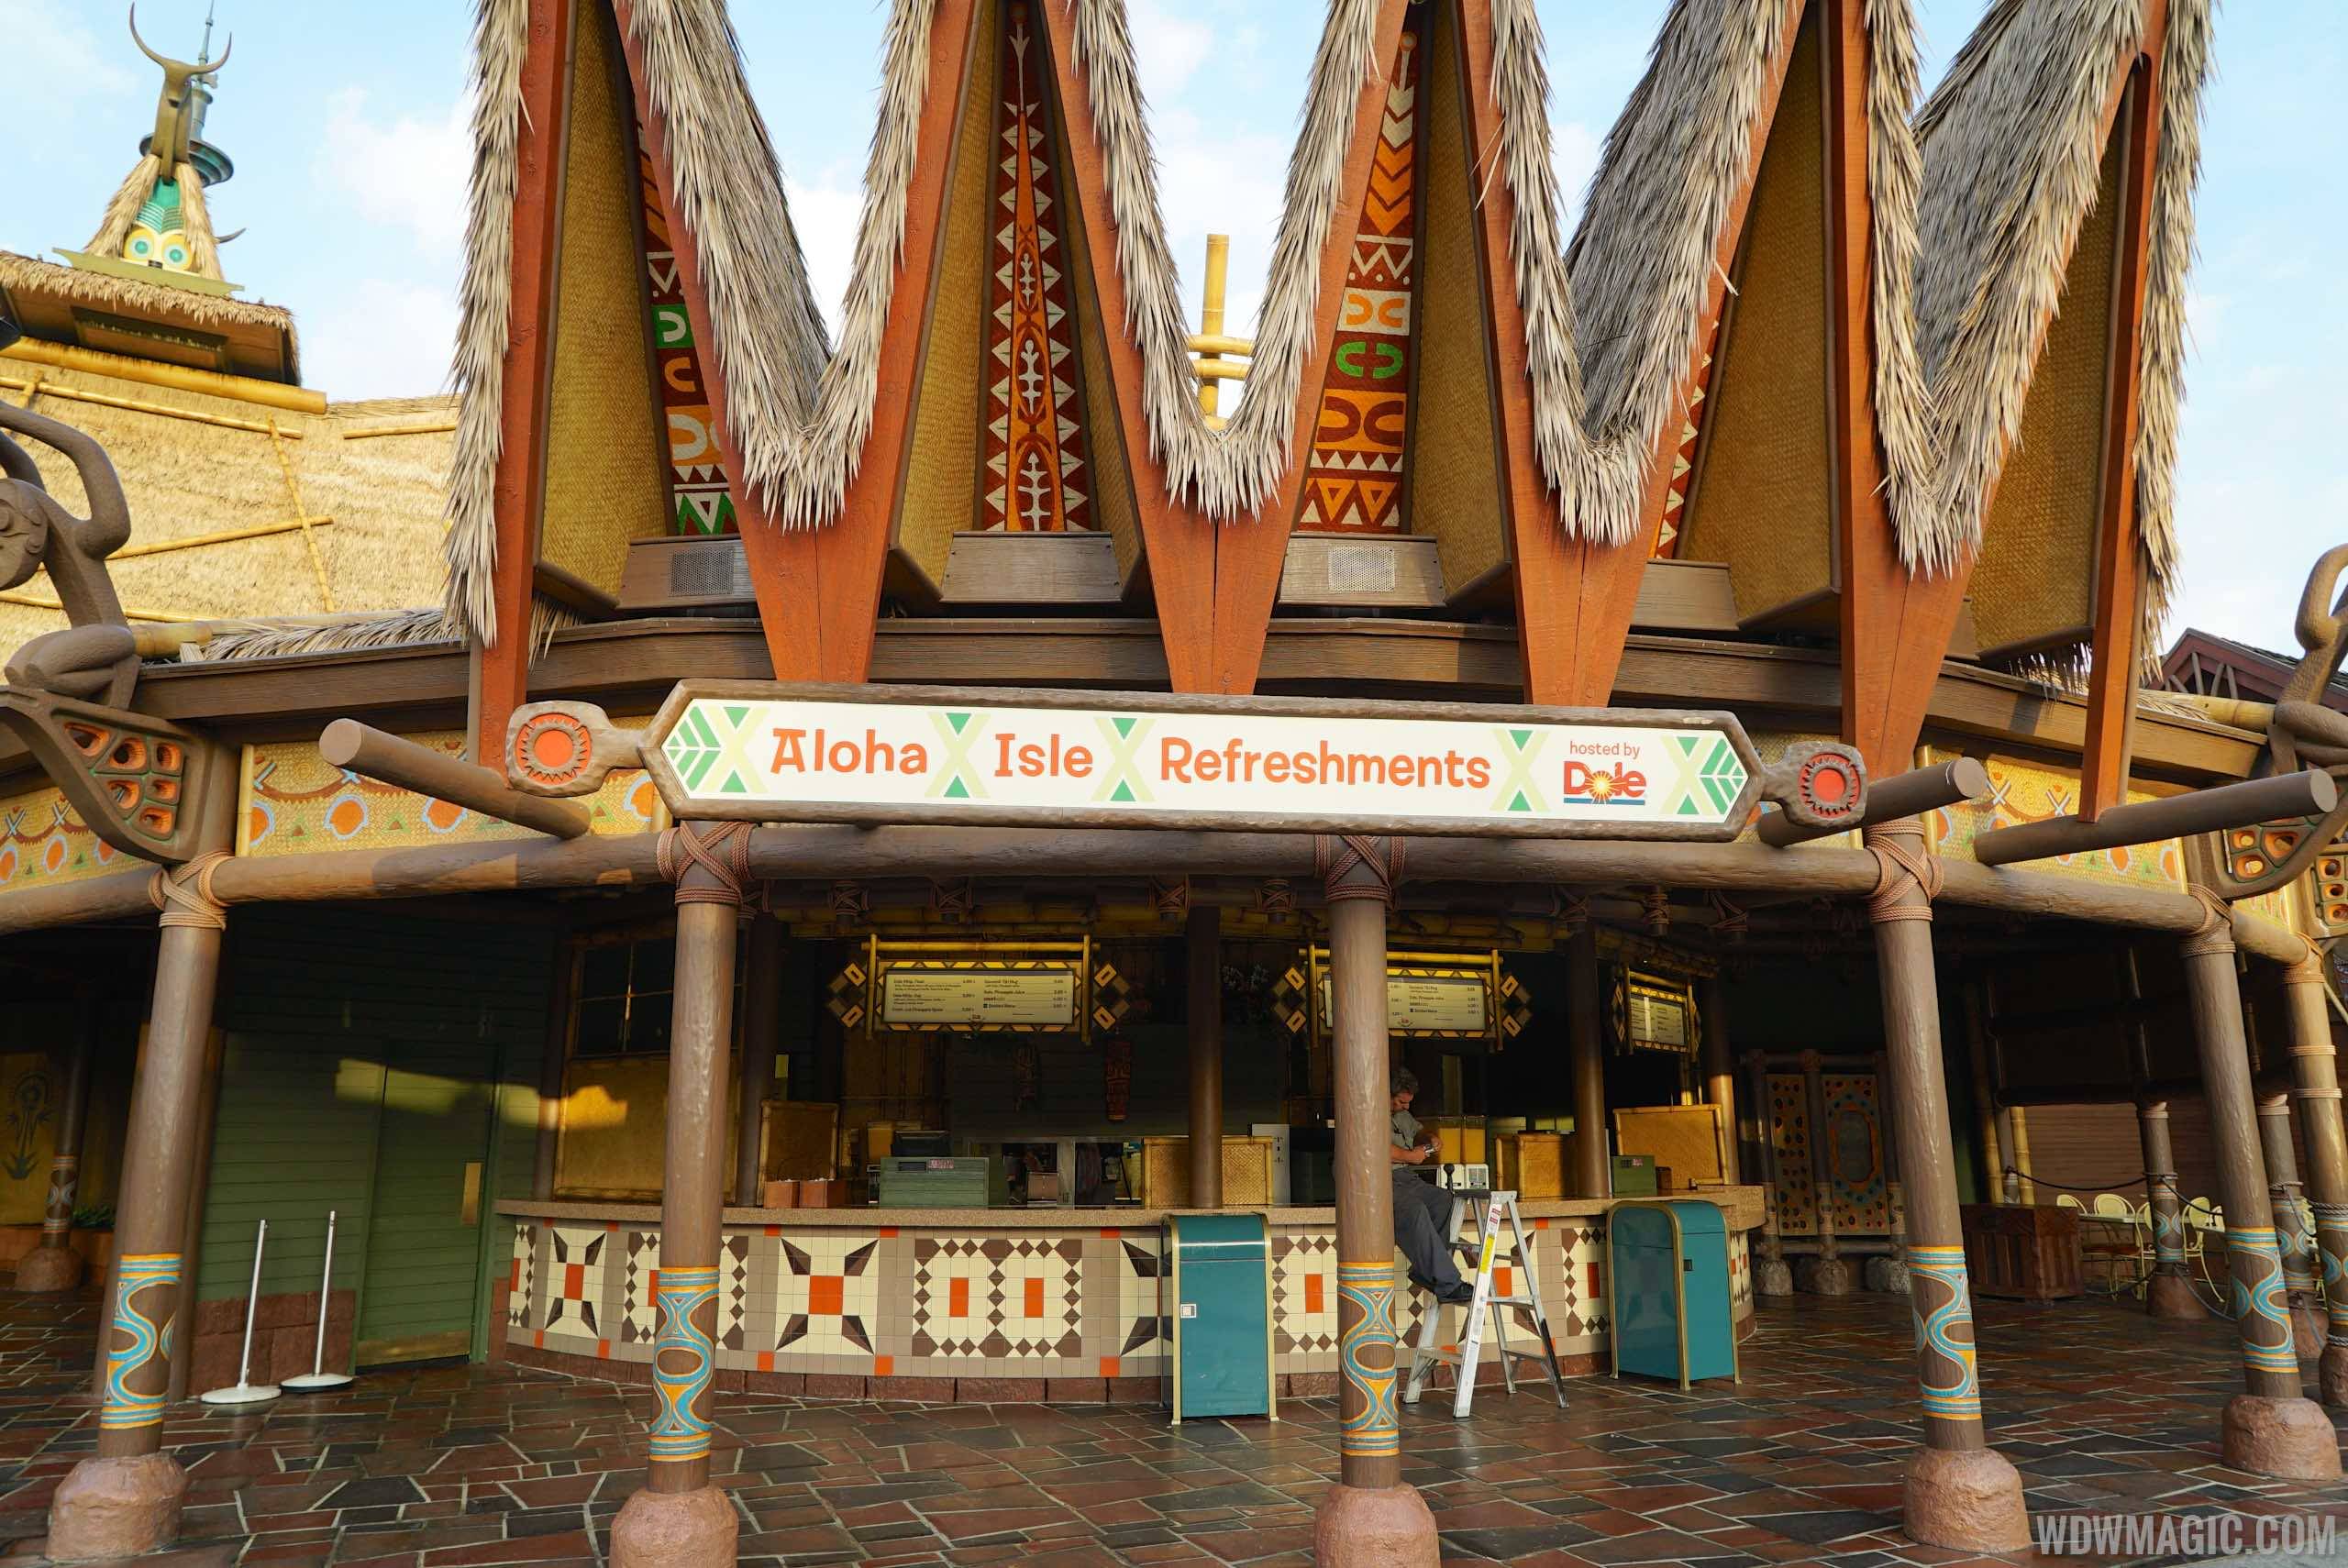 PHOTOS - Aloha Isle moves to new location in the Magic Kingdom's Adventureland